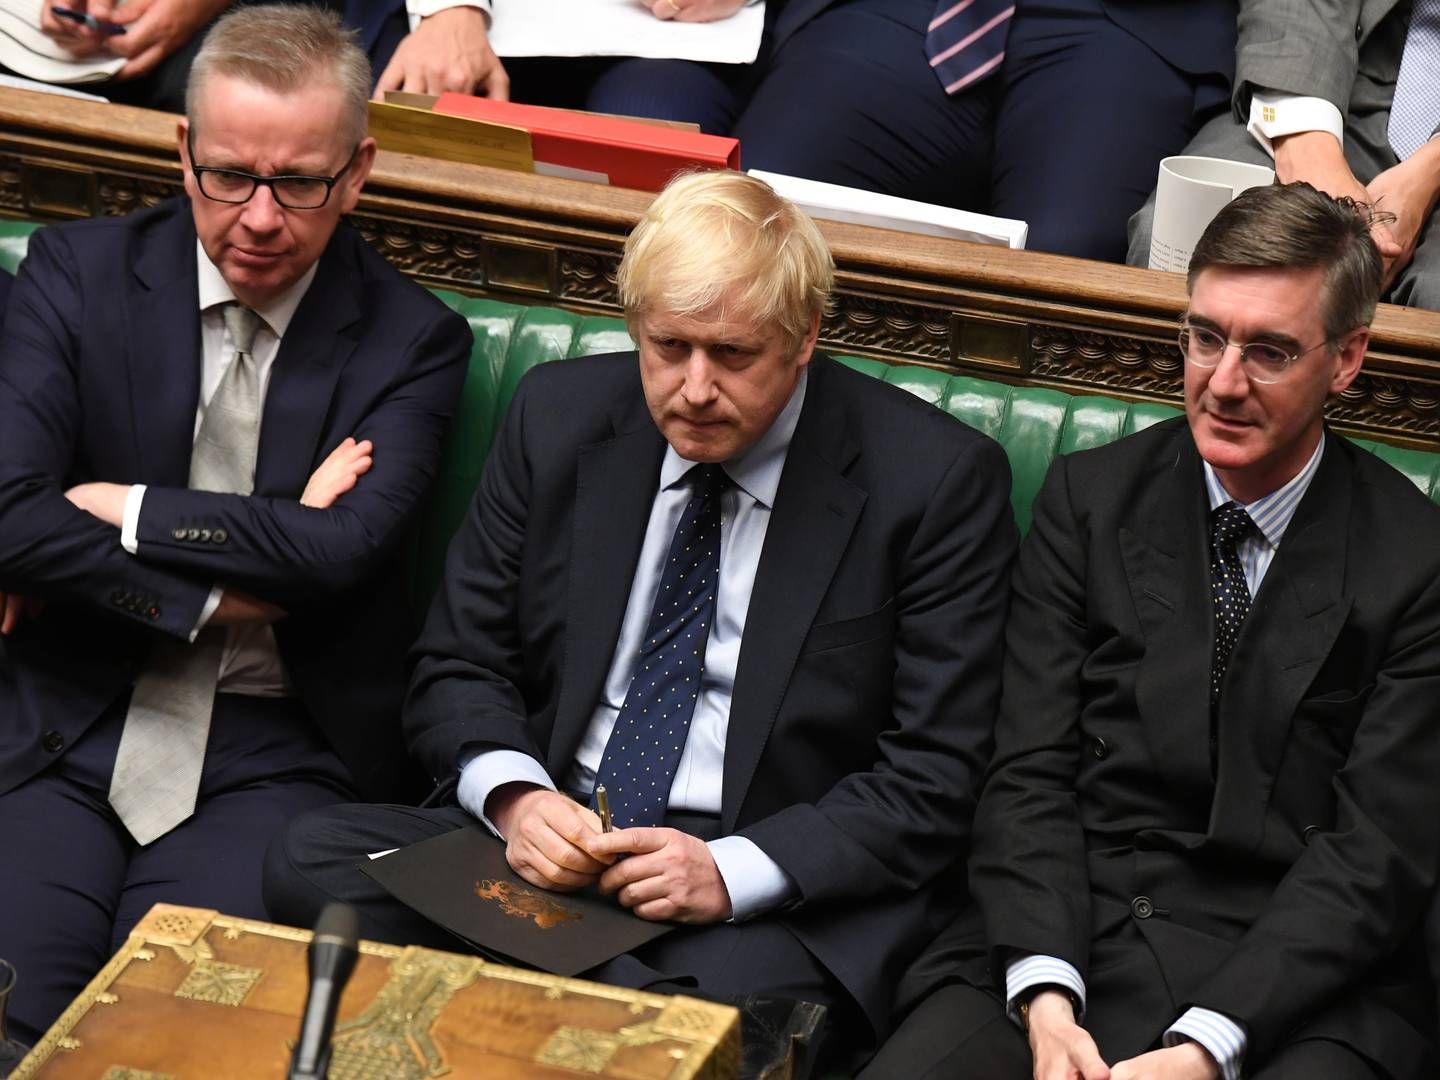 Foto: UK Parliament/Jessica Taylor/Reuters/Ritzau Scanpix